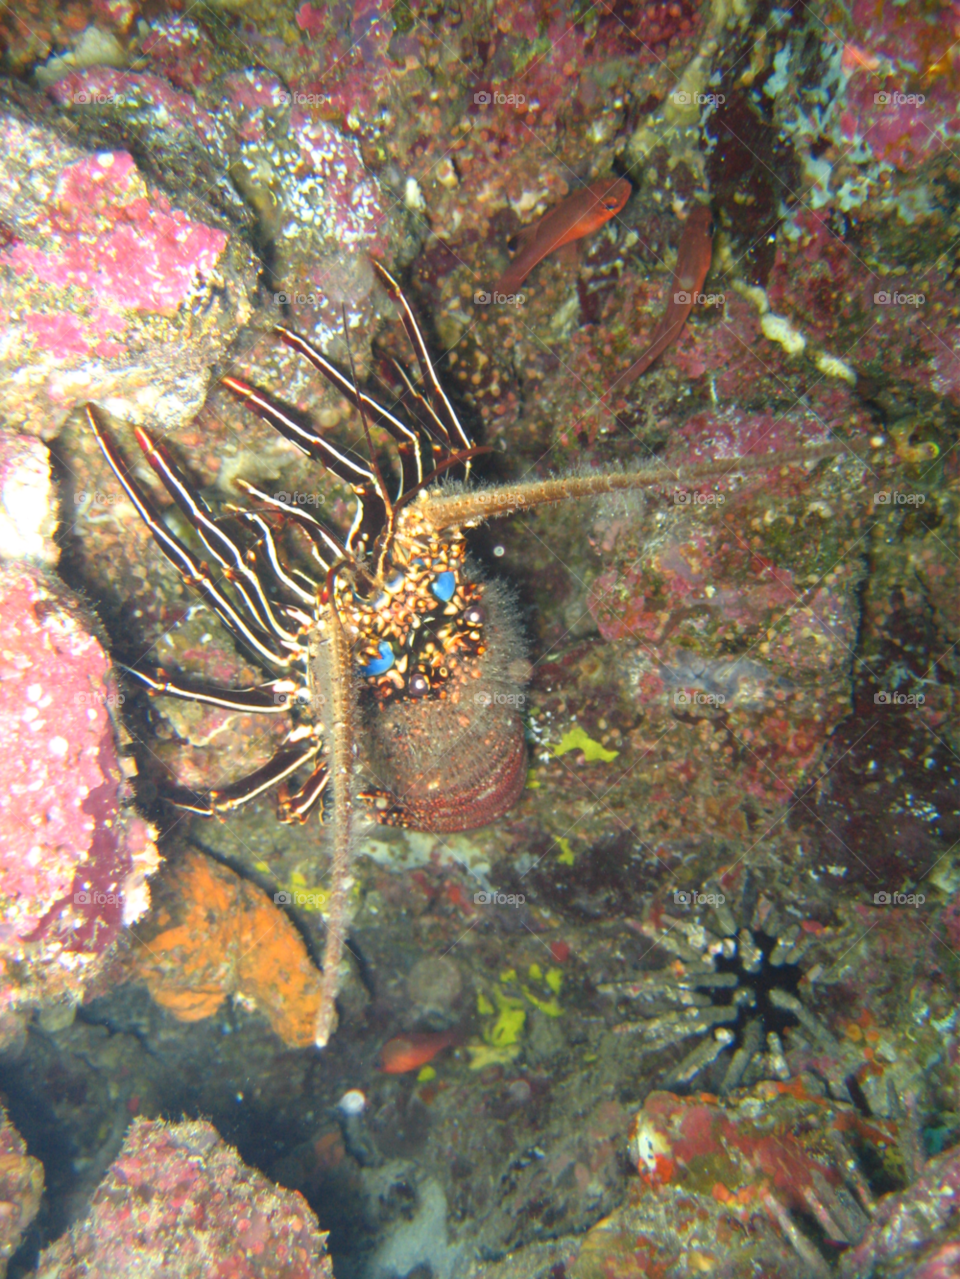 ocean blue eyes lobster by izabela.cib